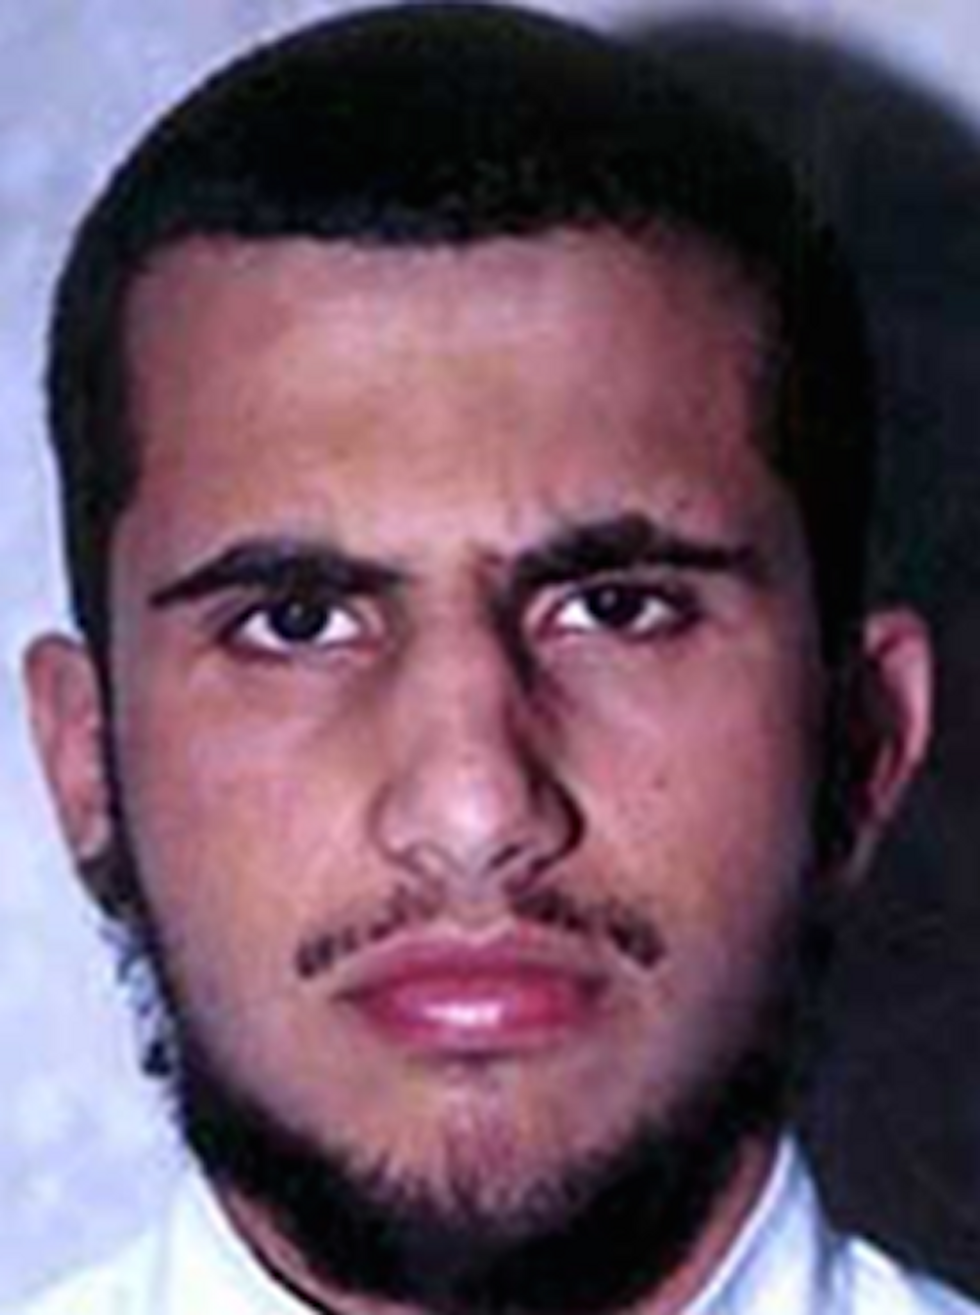 Leader of Khorasan Group, a Network of Veteran Al Qaeda Operatives, Killed in U.S. Strike